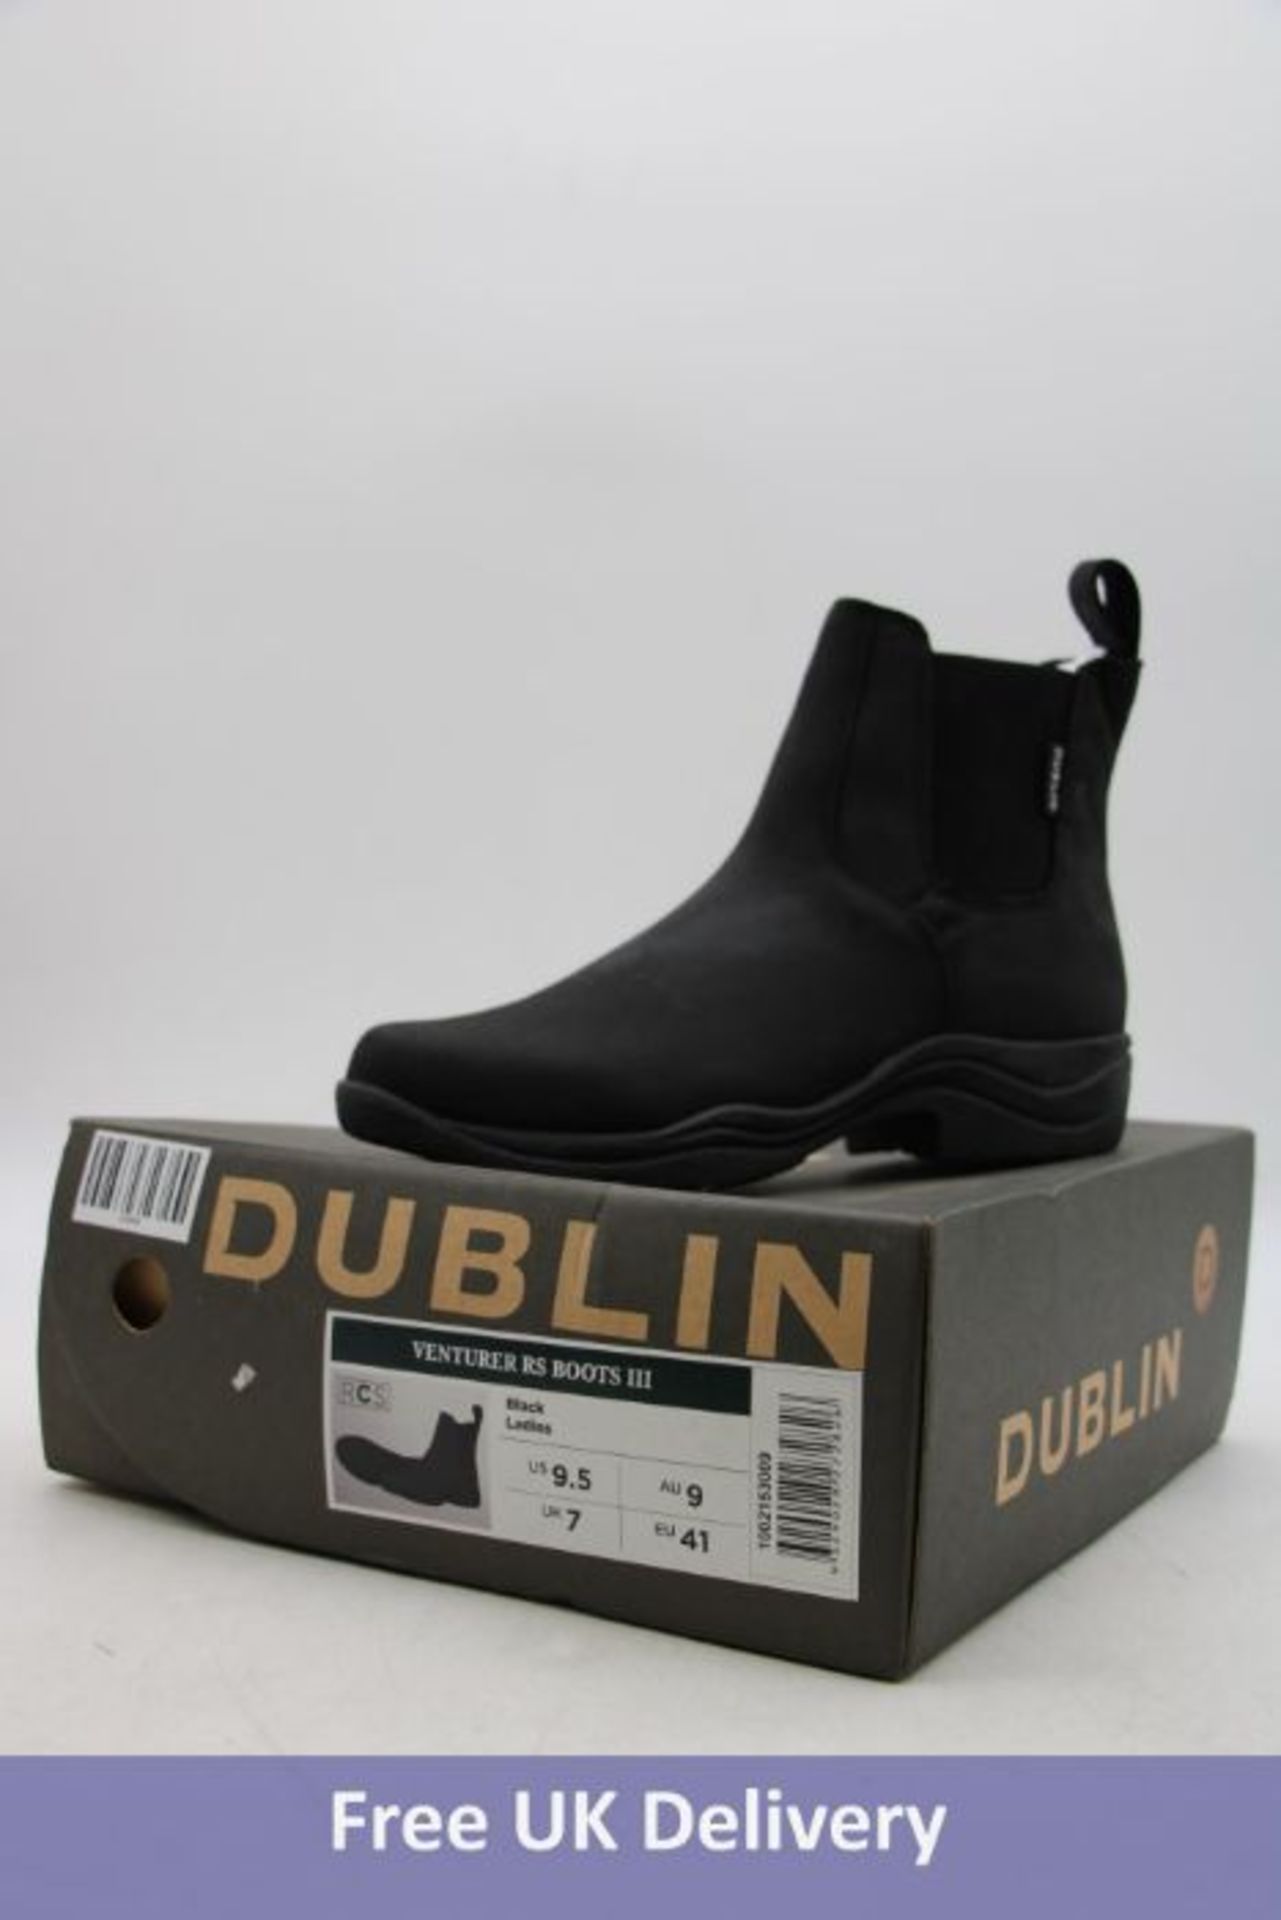 Dublin Women's Venturer RS Boots, Black, UK 7. Box damaged